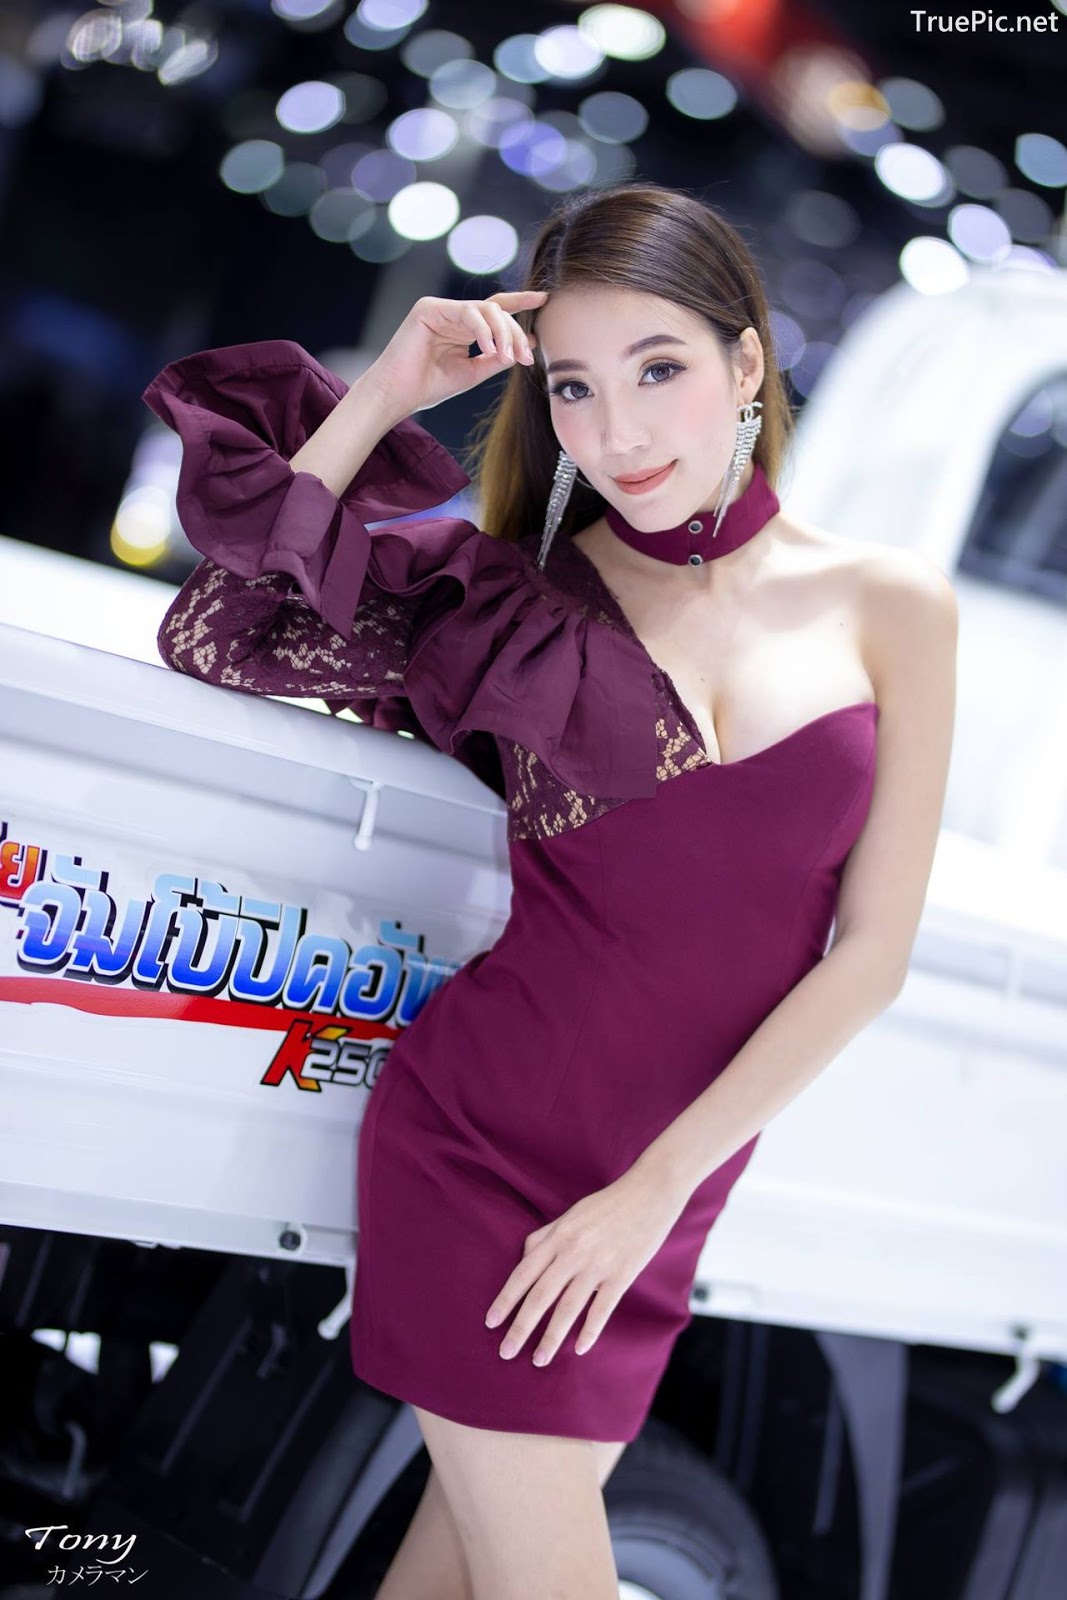 Image-Thailand-Hot-Model-Thai-Racing-Girl-At-Big-Motor-2018-TruePic.net- Picture-61